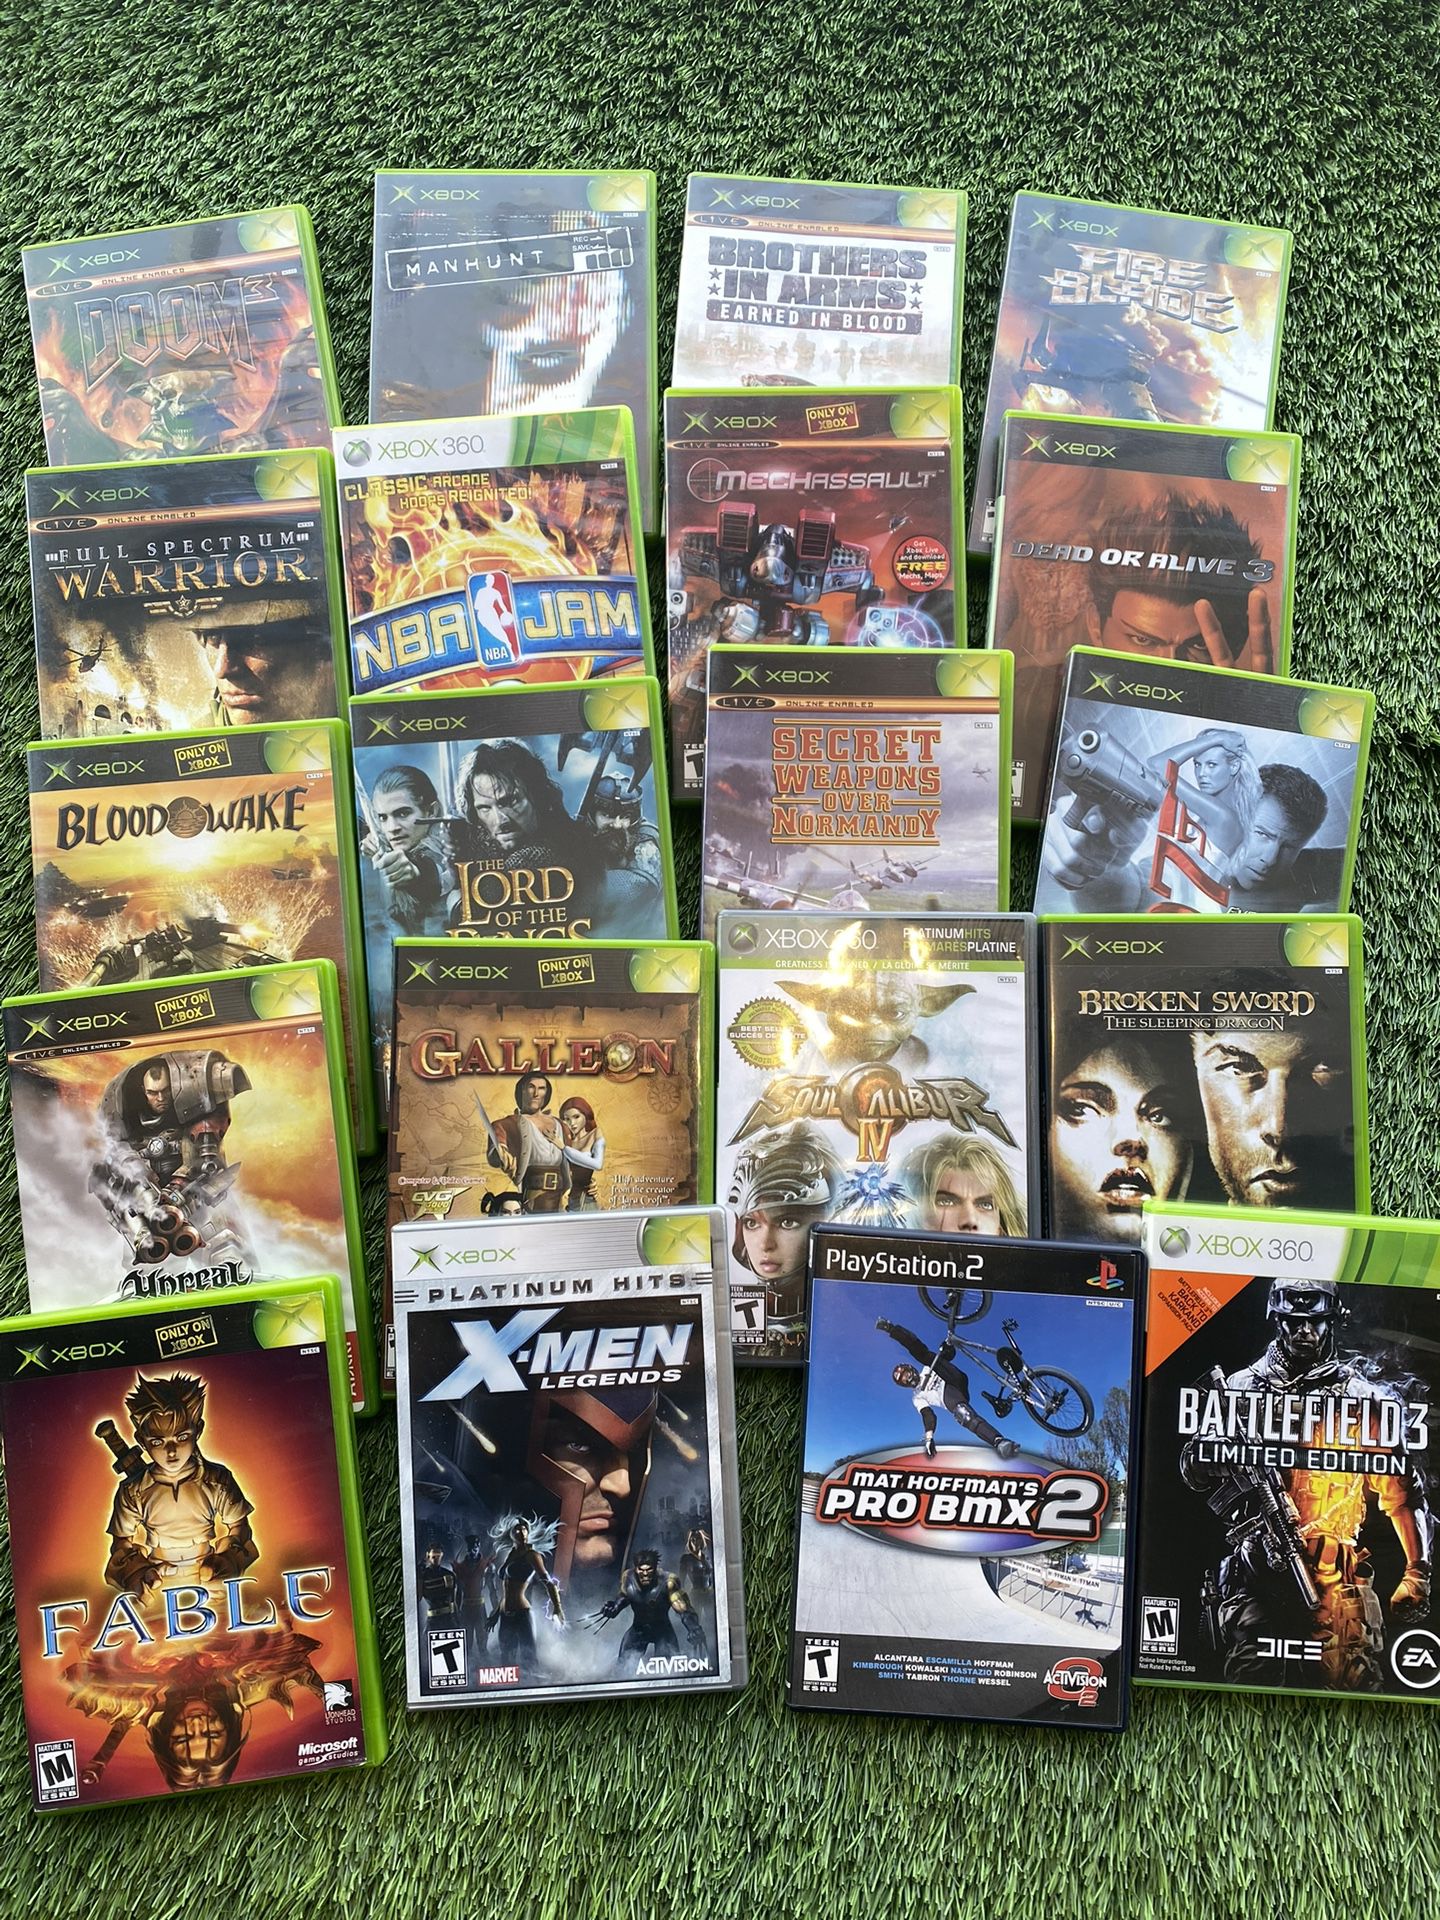 Xbox, Halo, Video Games, Xbox 360, NBA Jam, Fable